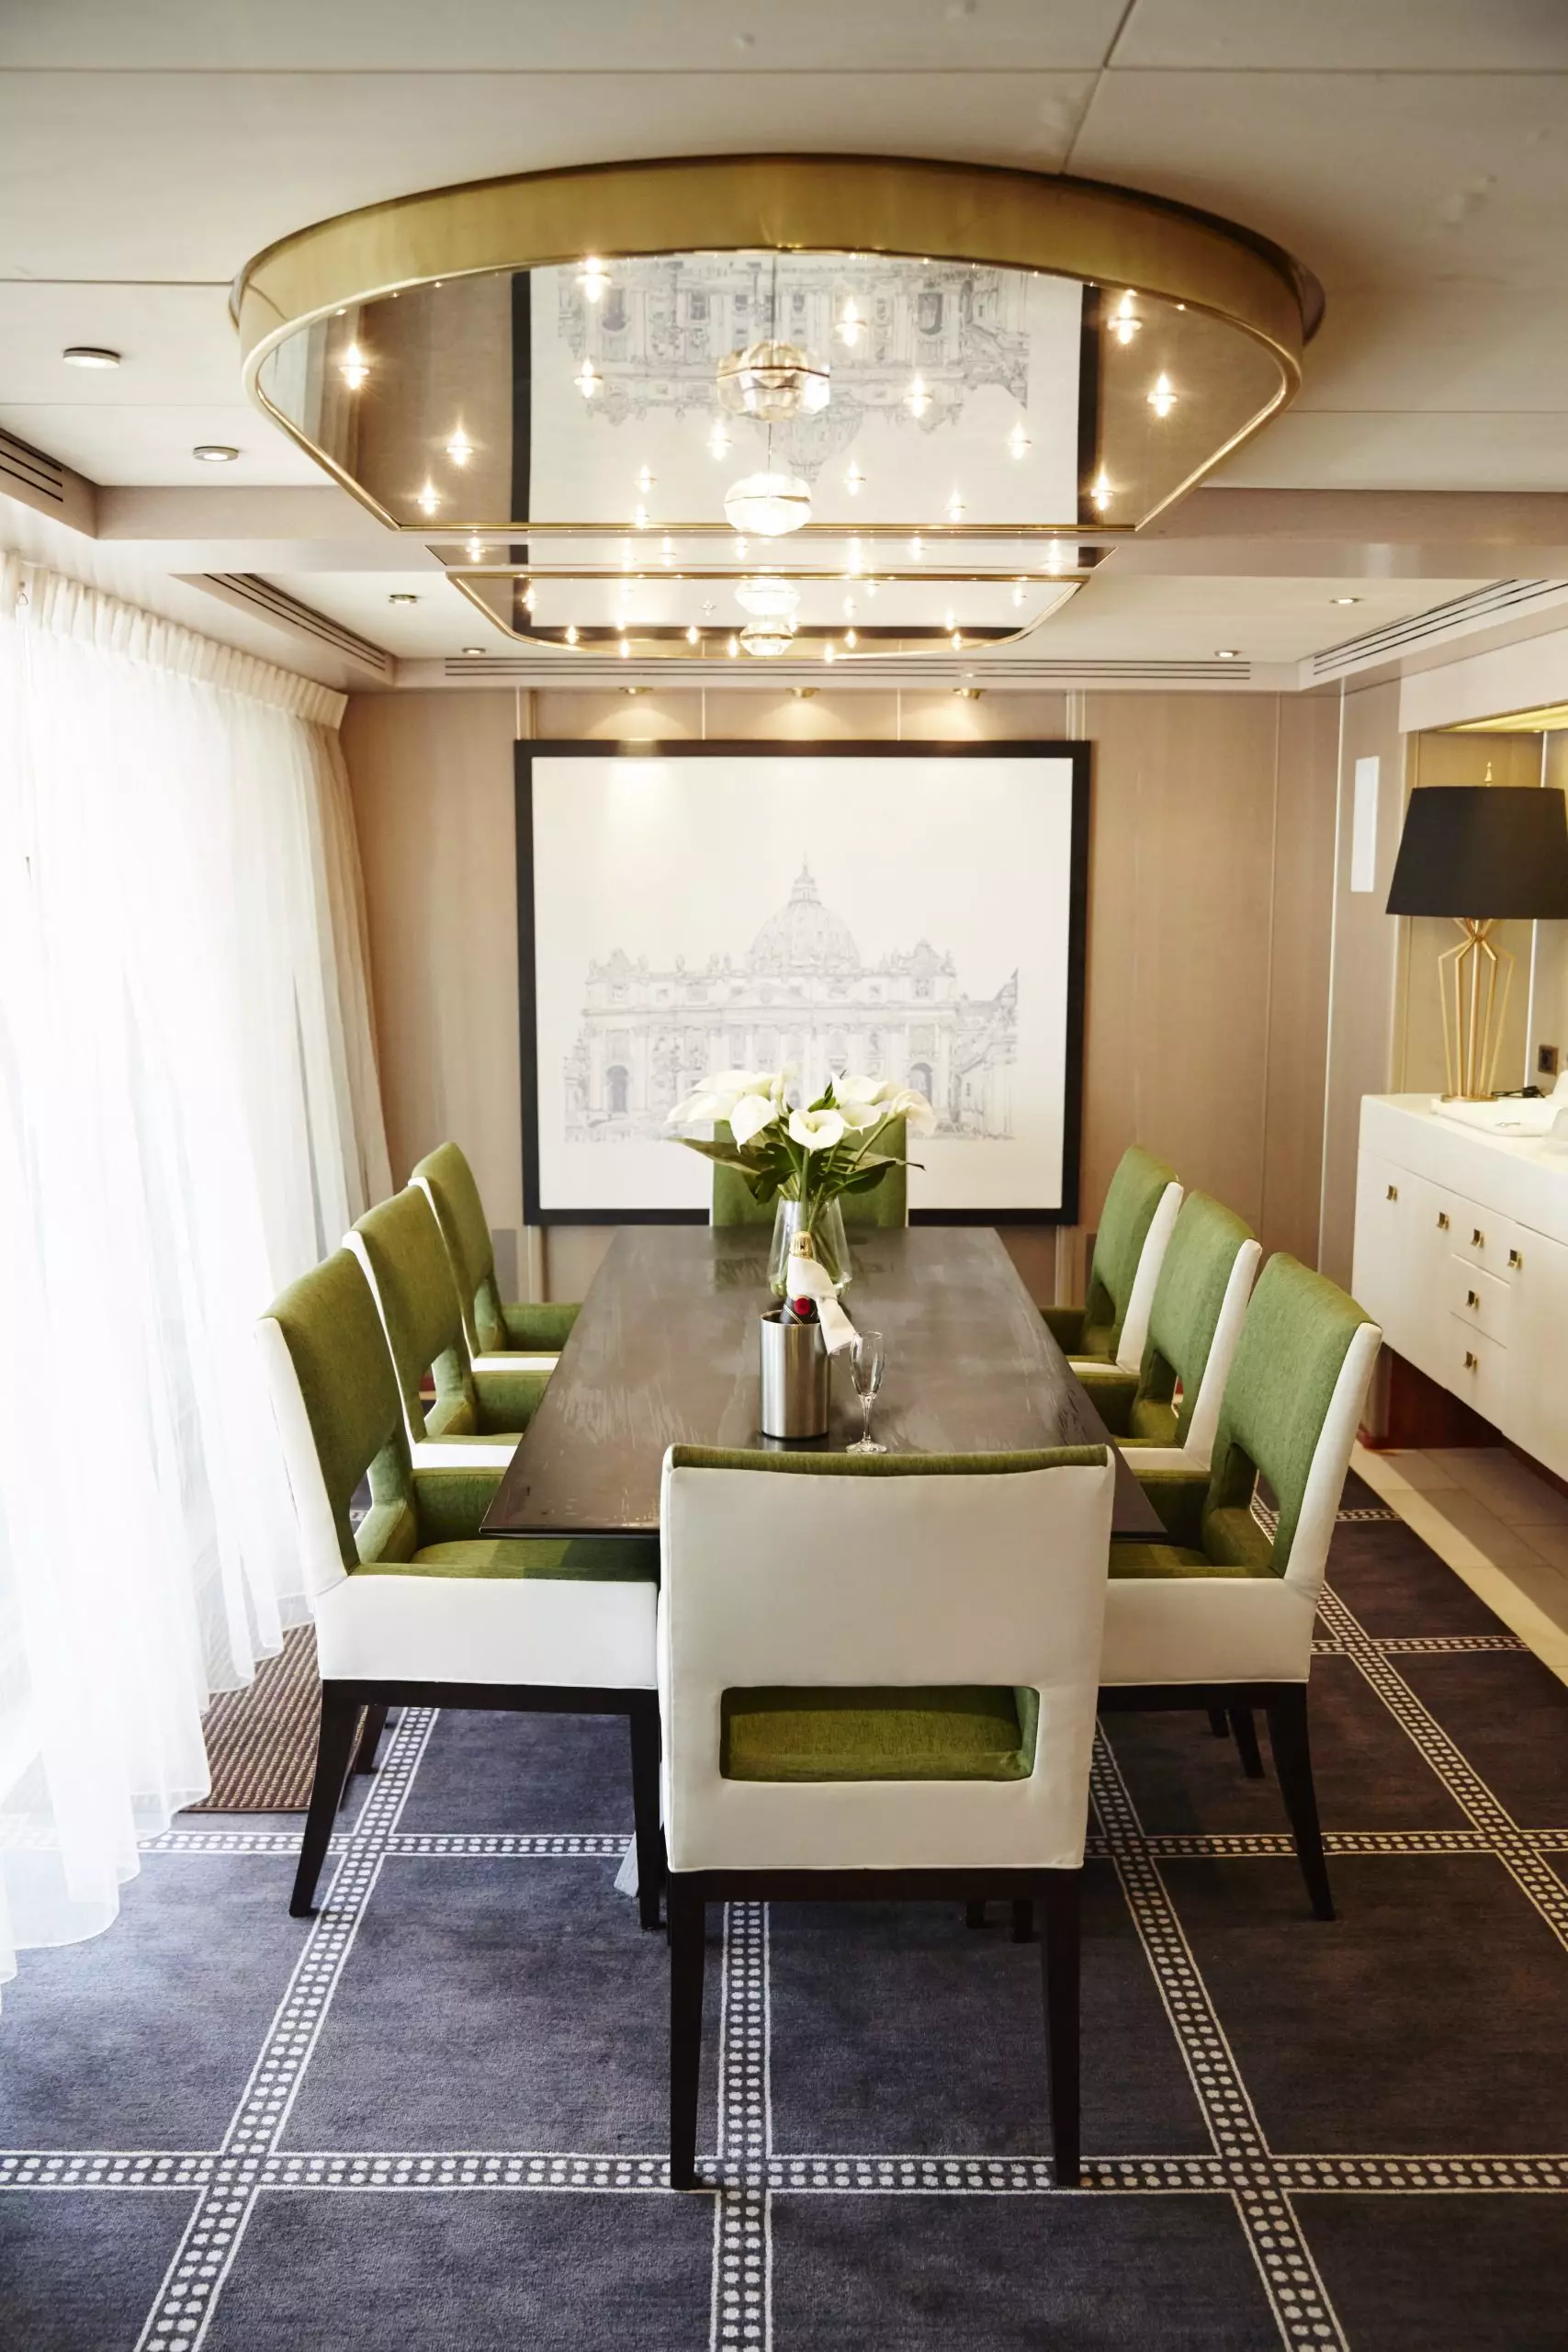 Journey Ship SP Penthouse Suite Balcony deck 10 dining area scaled.jpg